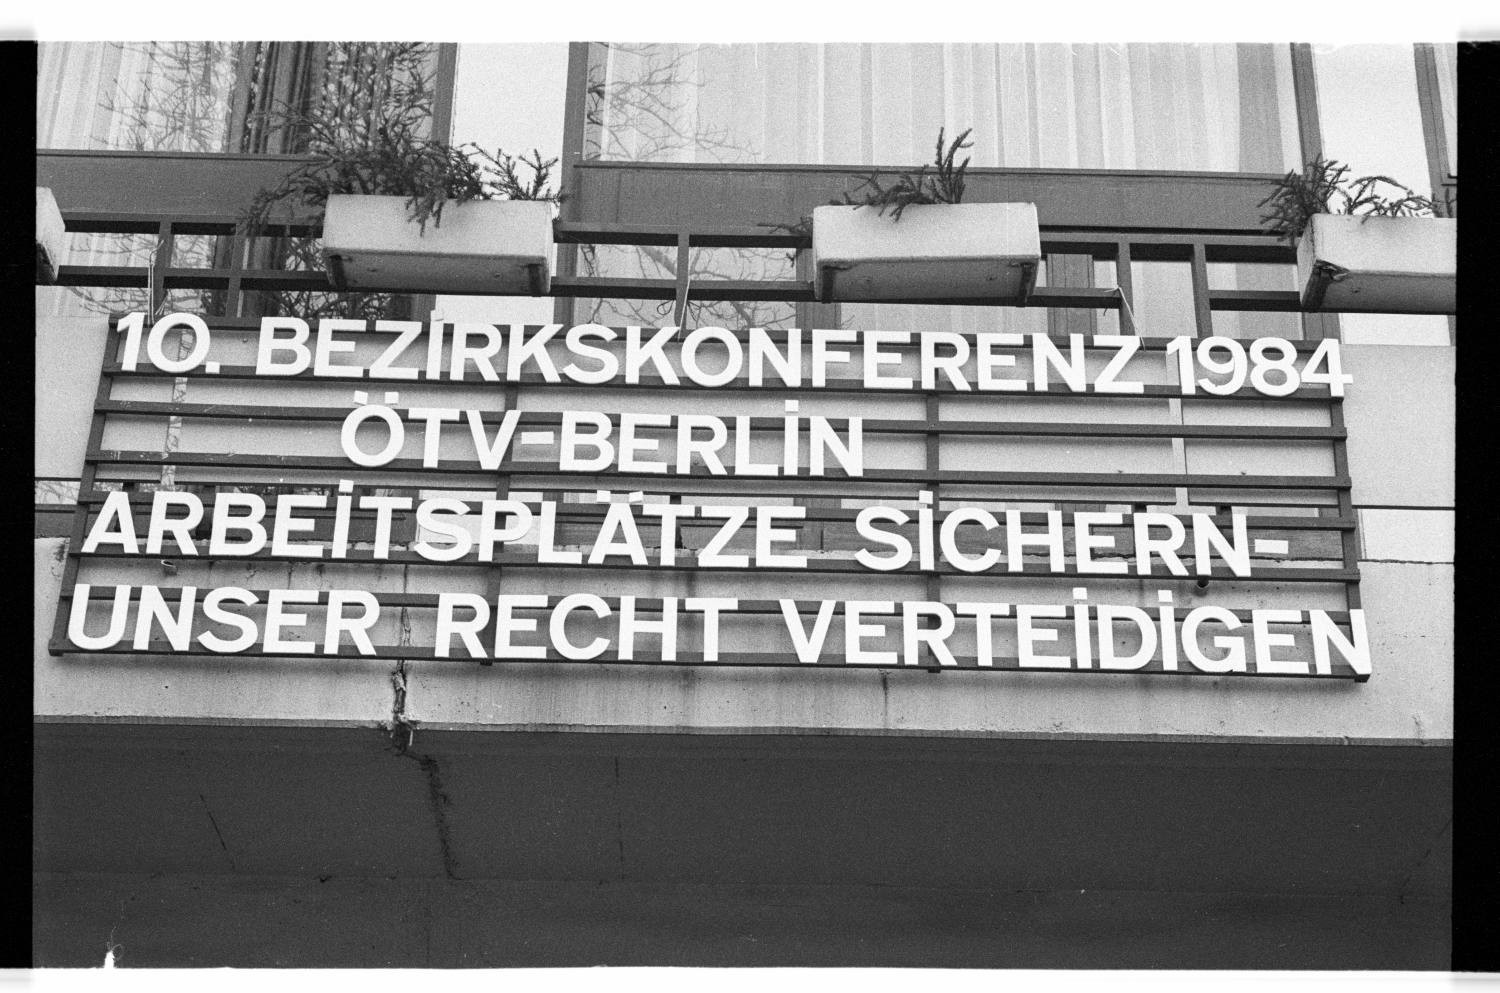 Kleinbildnegative: ÖTV-Bezirkskonferenz, Prälat Schöneberg, 1984 (Museen Tempelhof-Schöneberg/Jürgen Henschel RR-F)